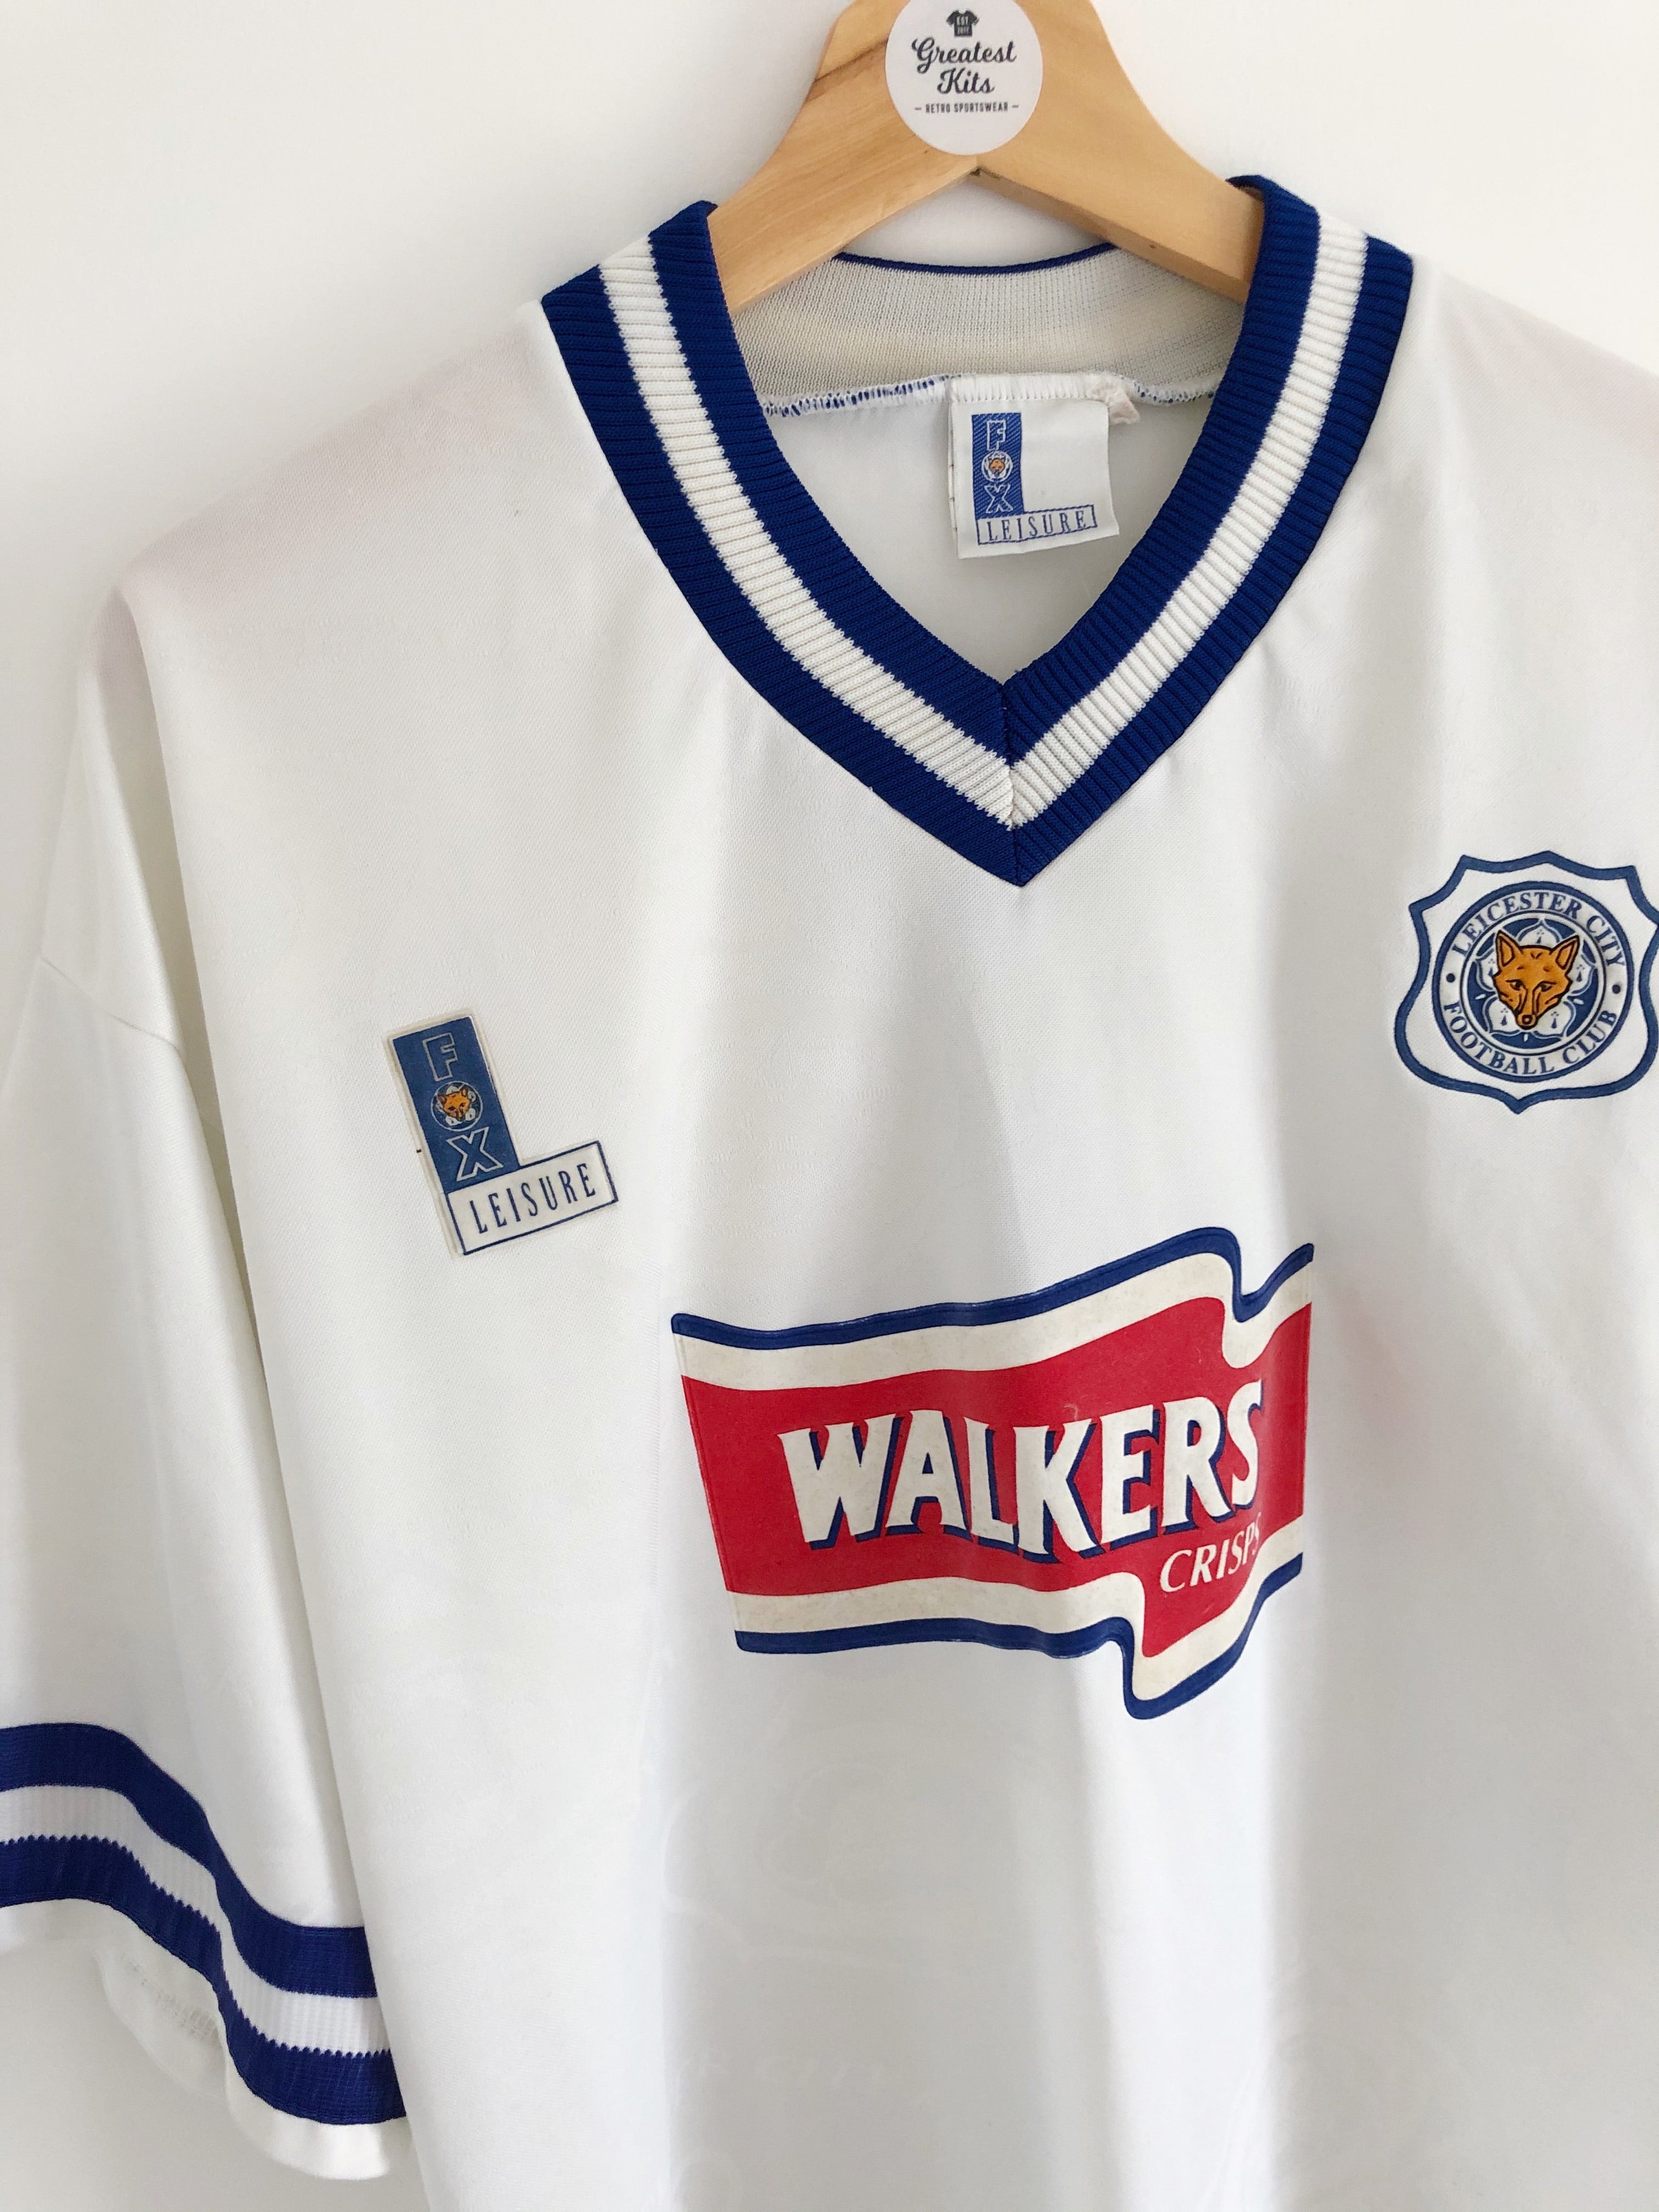 1996/98 Leicester Away Shirt #2 (L) 8.5/10